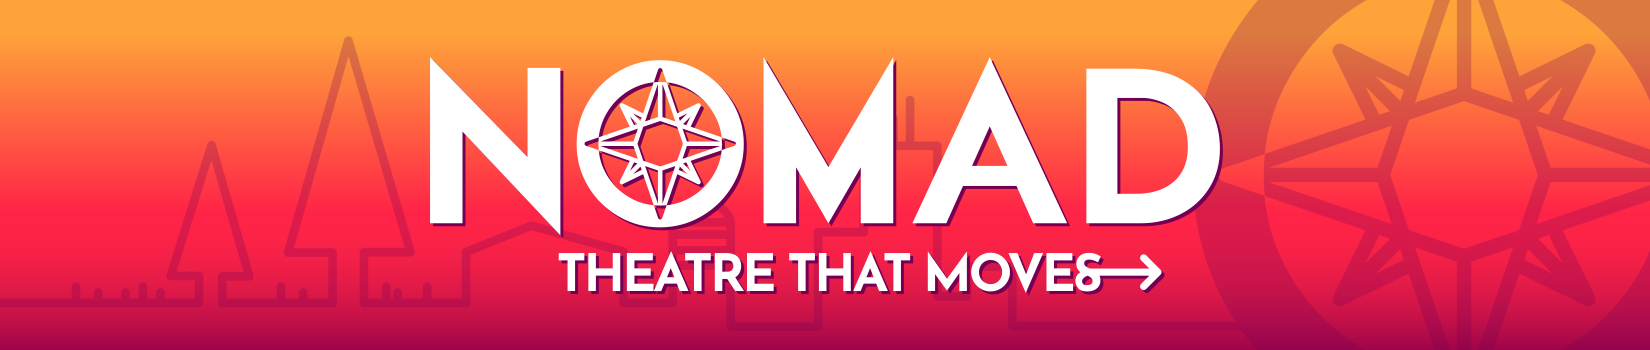 Nomad Theatre Company